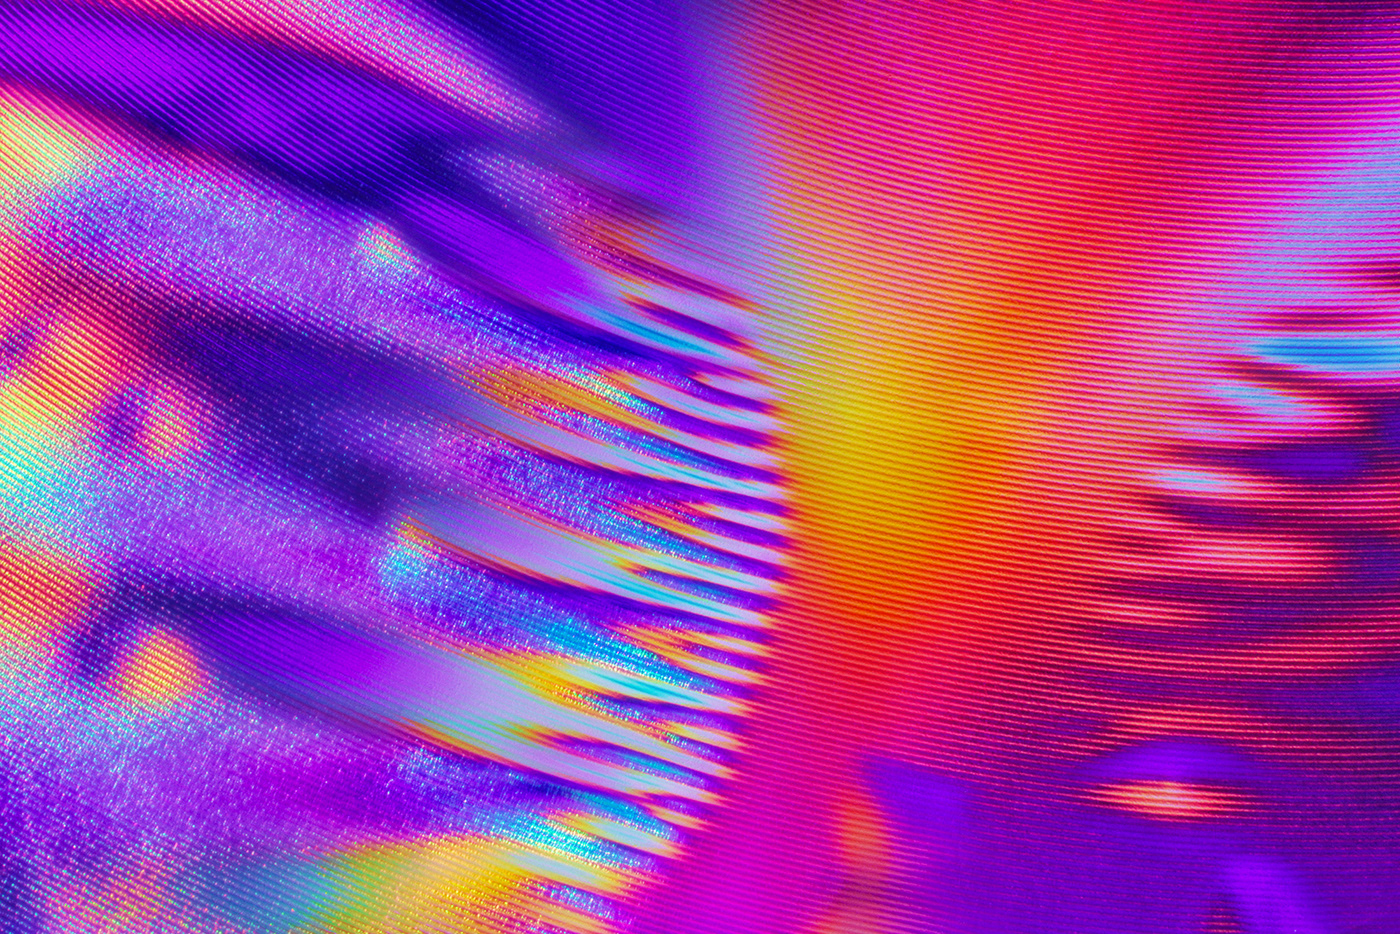 Photography  cd rainbow color glow abstract art wallpaper sonya7r2 photo